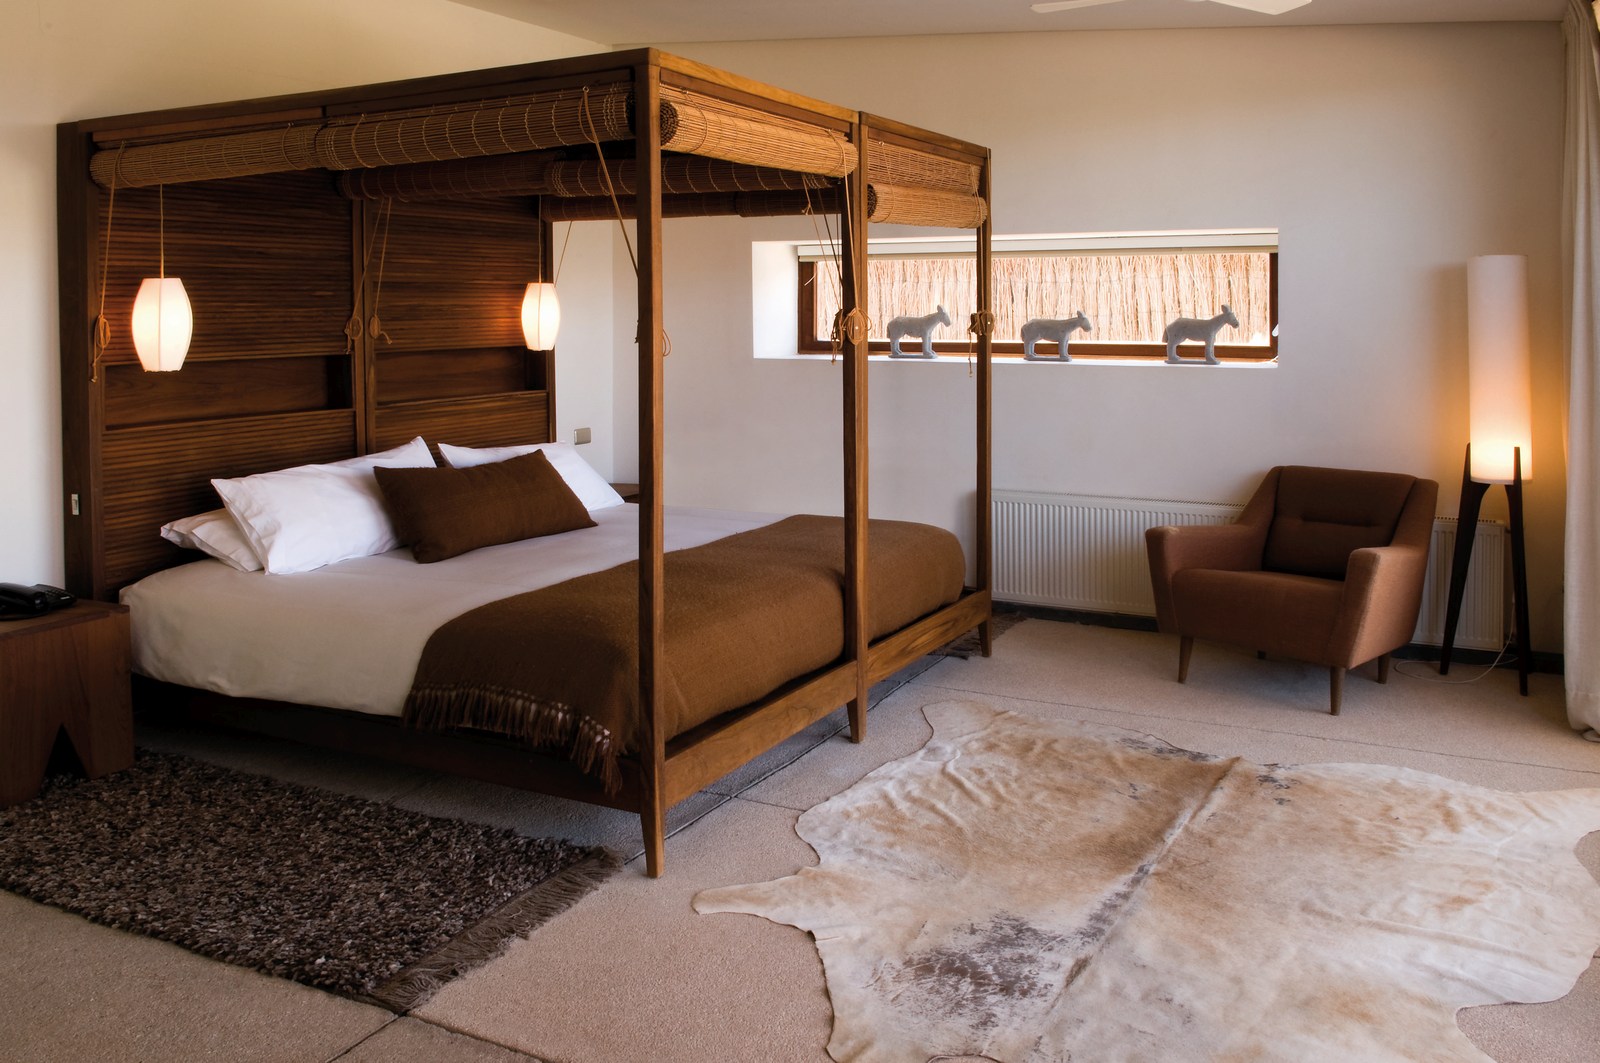 Double bedroom in Hotel Tierra Atacama, Chile